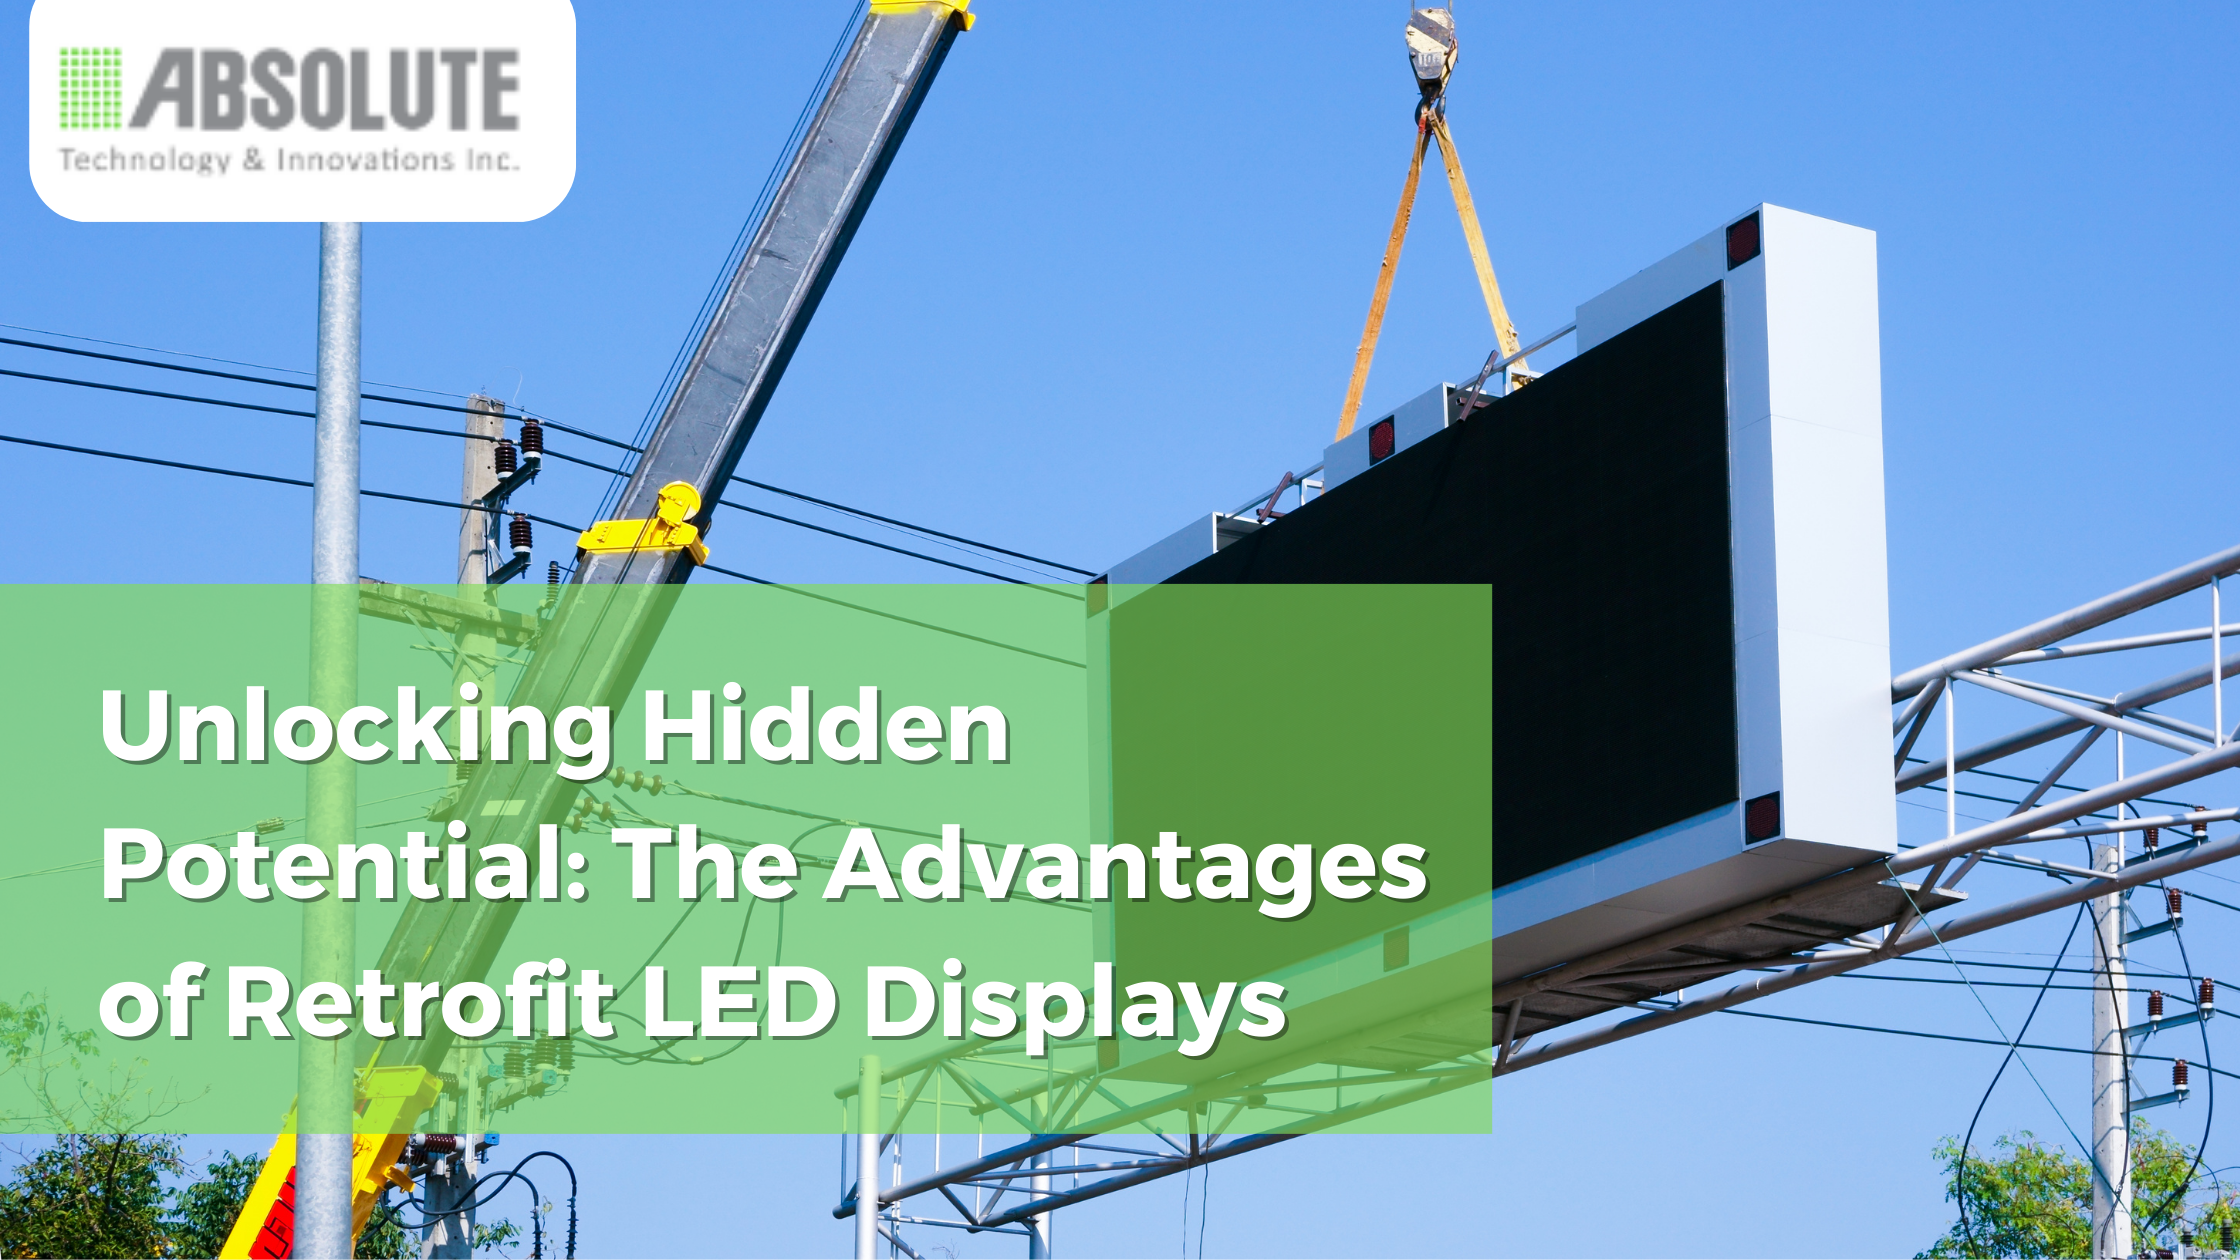 The Advantages of Retrofit LED Displays